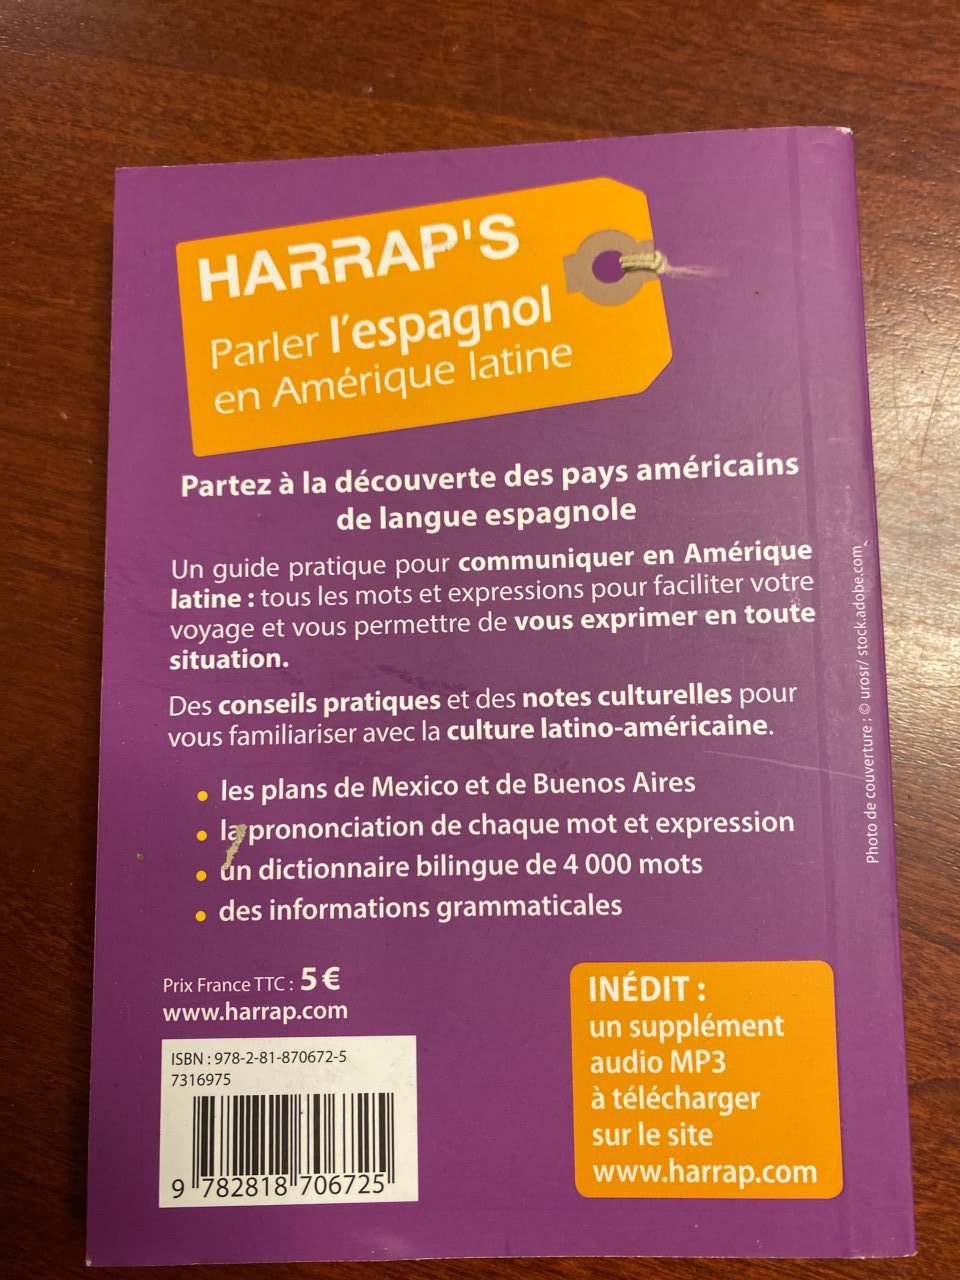 Kniha Harrap's Harrap's parler L'ESPAGNOL en Amérique latine